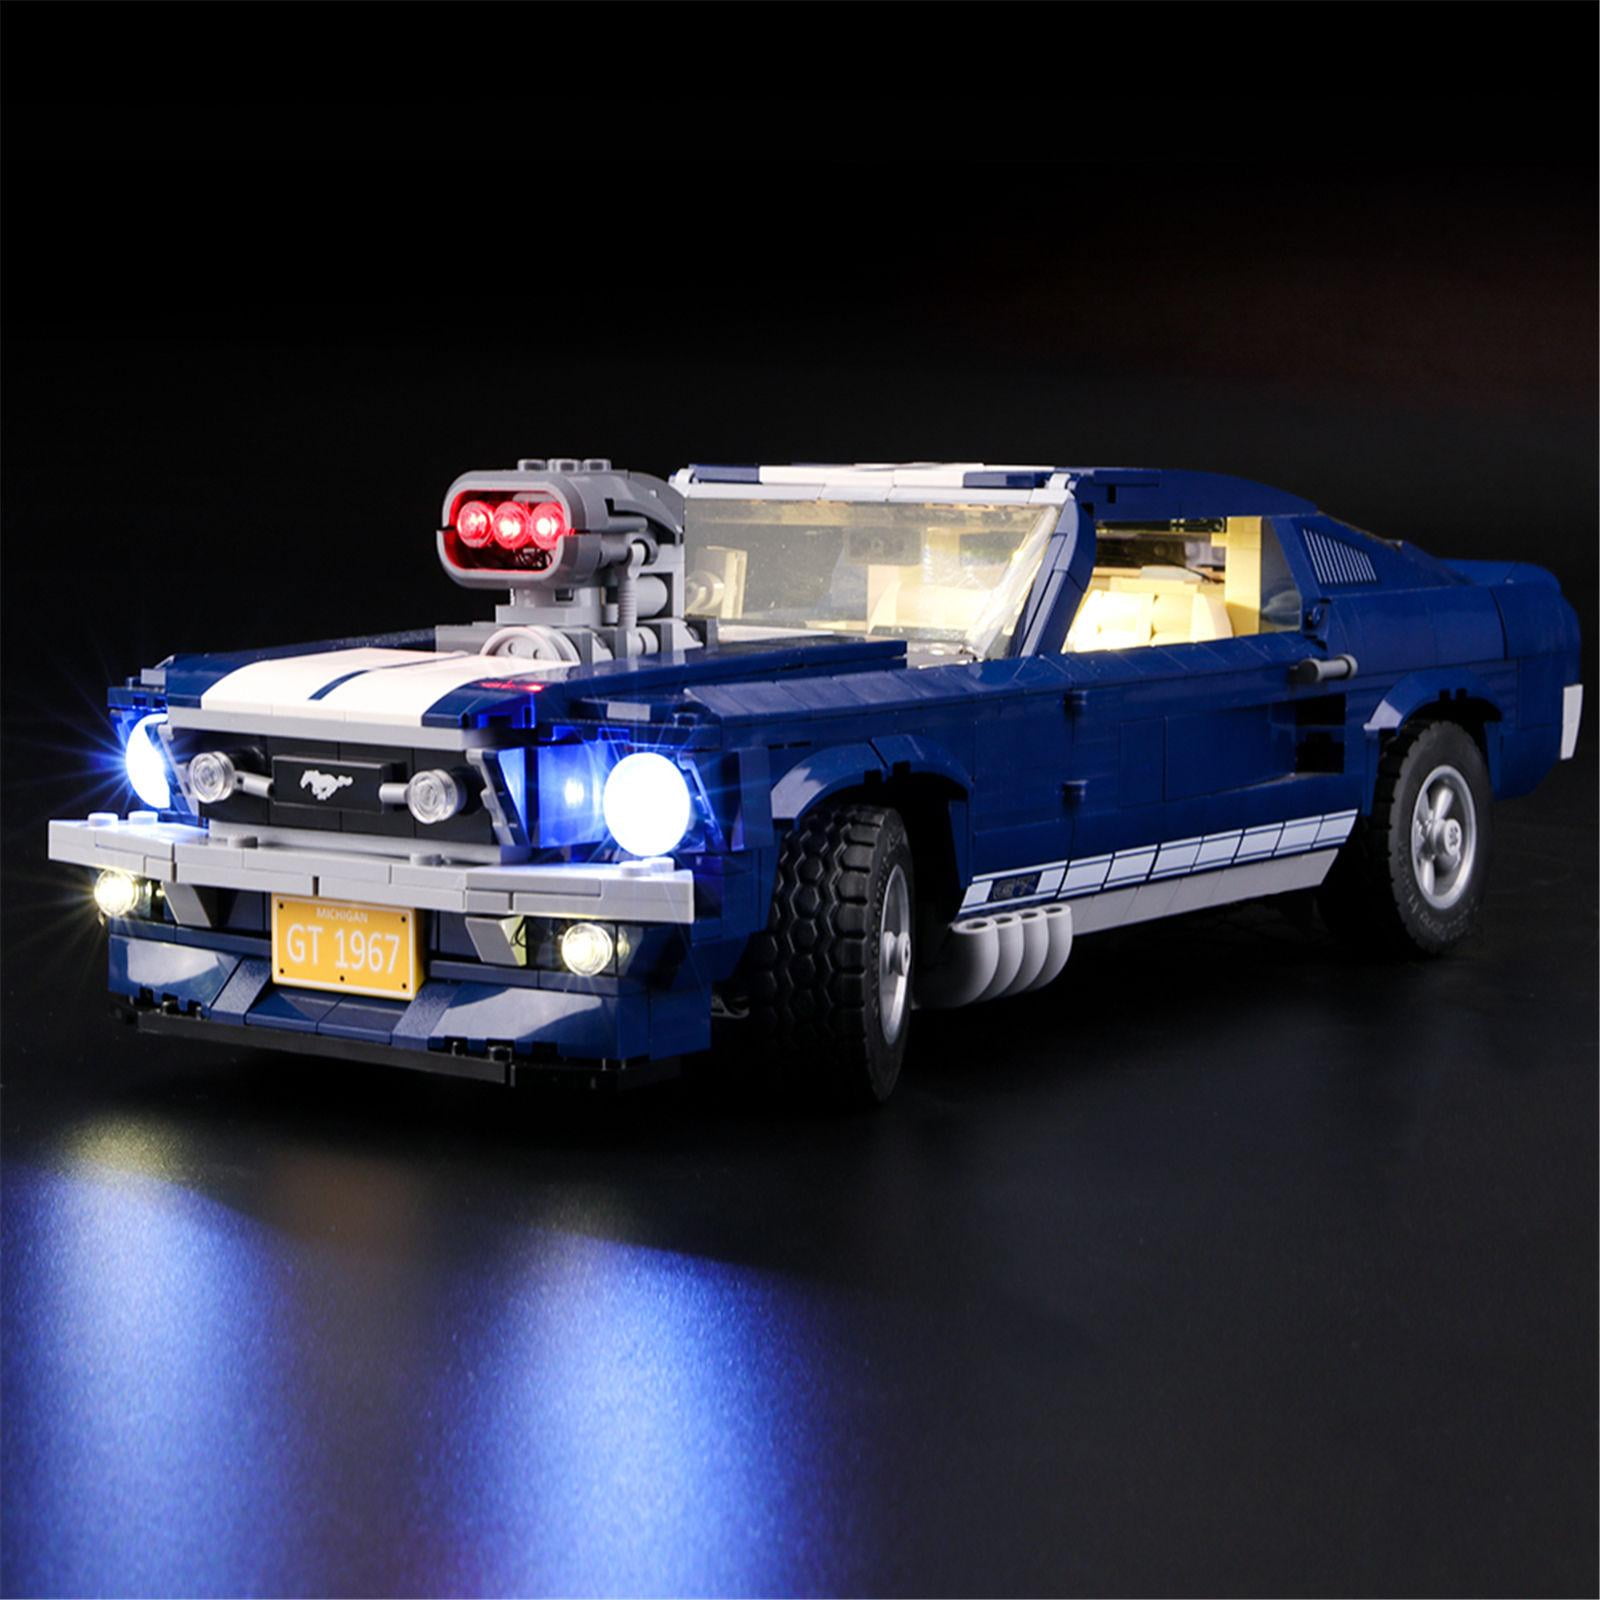 LEGO Technic - Ford Mustang Shelby(r) GT500(r) 42138 - Dès 9 ans - Super U,  Hyper U, U Express 